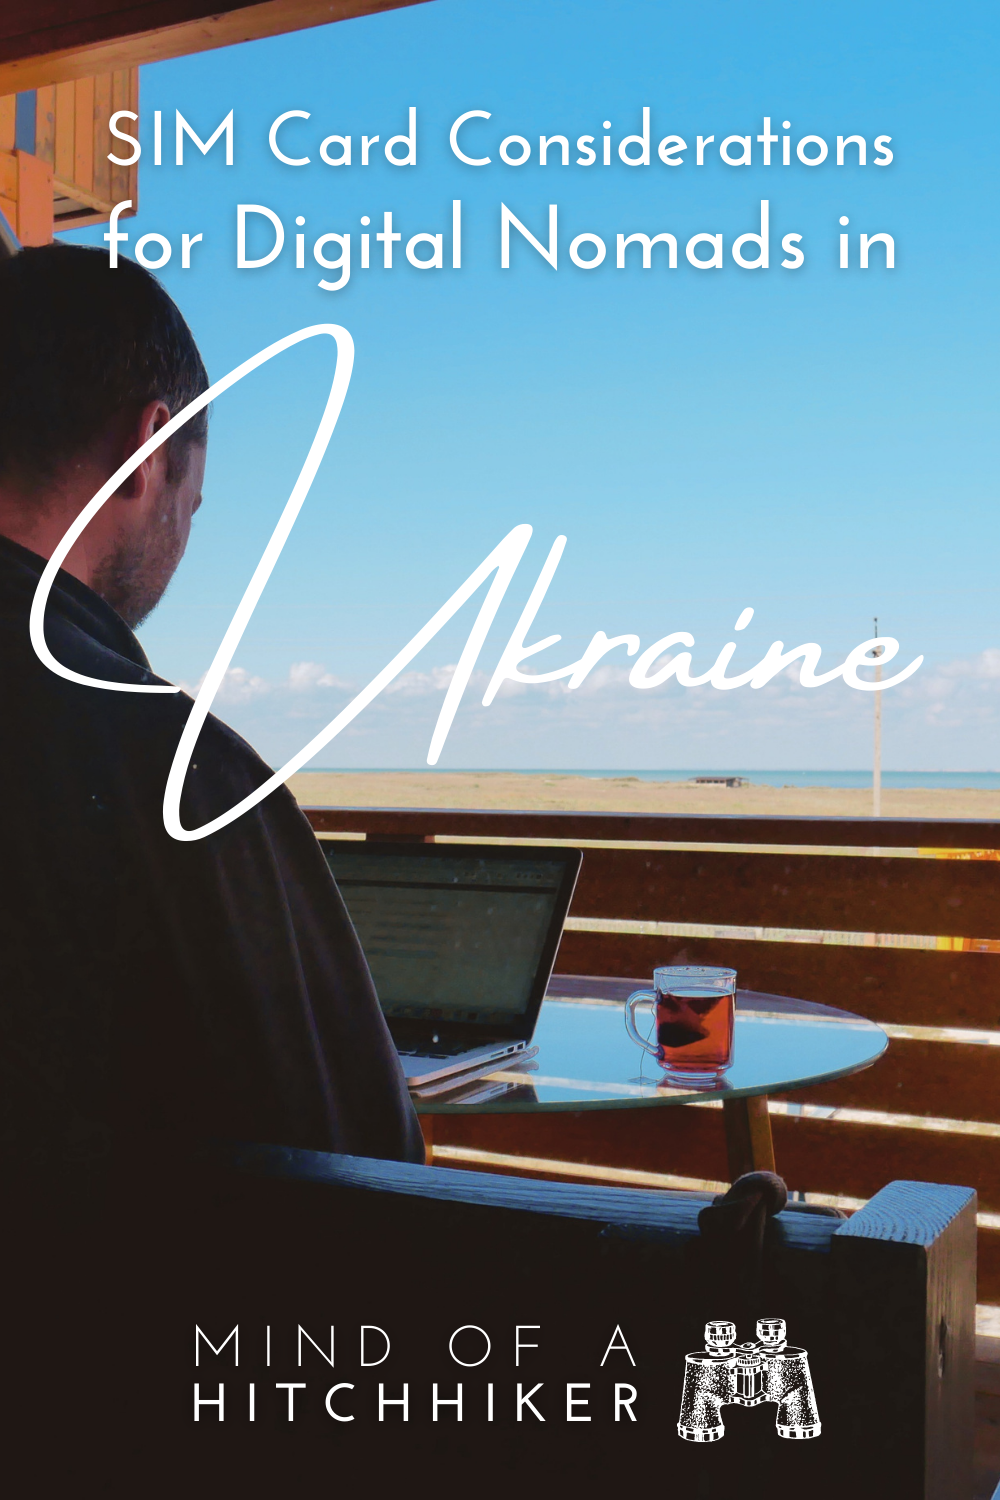 digital nomad in ukraine which sim card is best for remote work